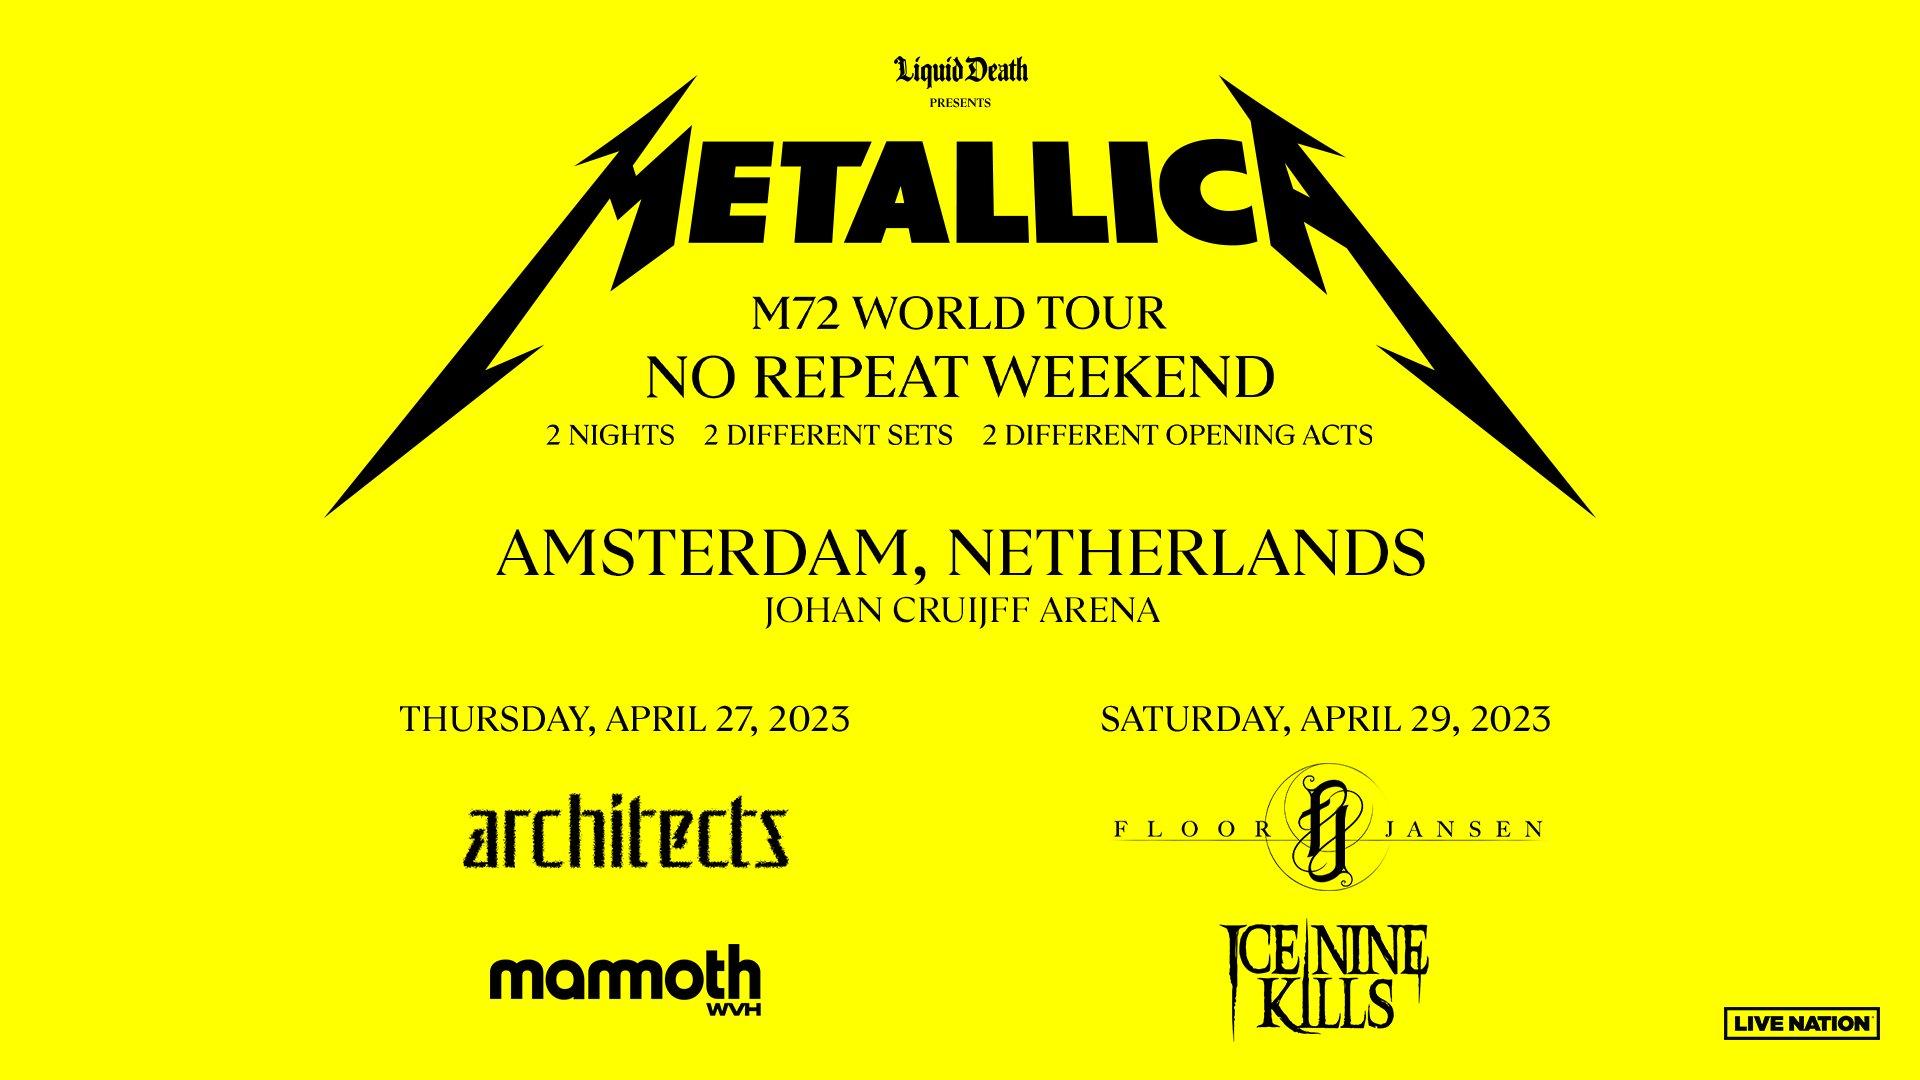 Metallica at Johan Cruijff ArenA in Amsterdam, Netherlands on April 27, 2023  on the M72 World Tour | Metallica.com